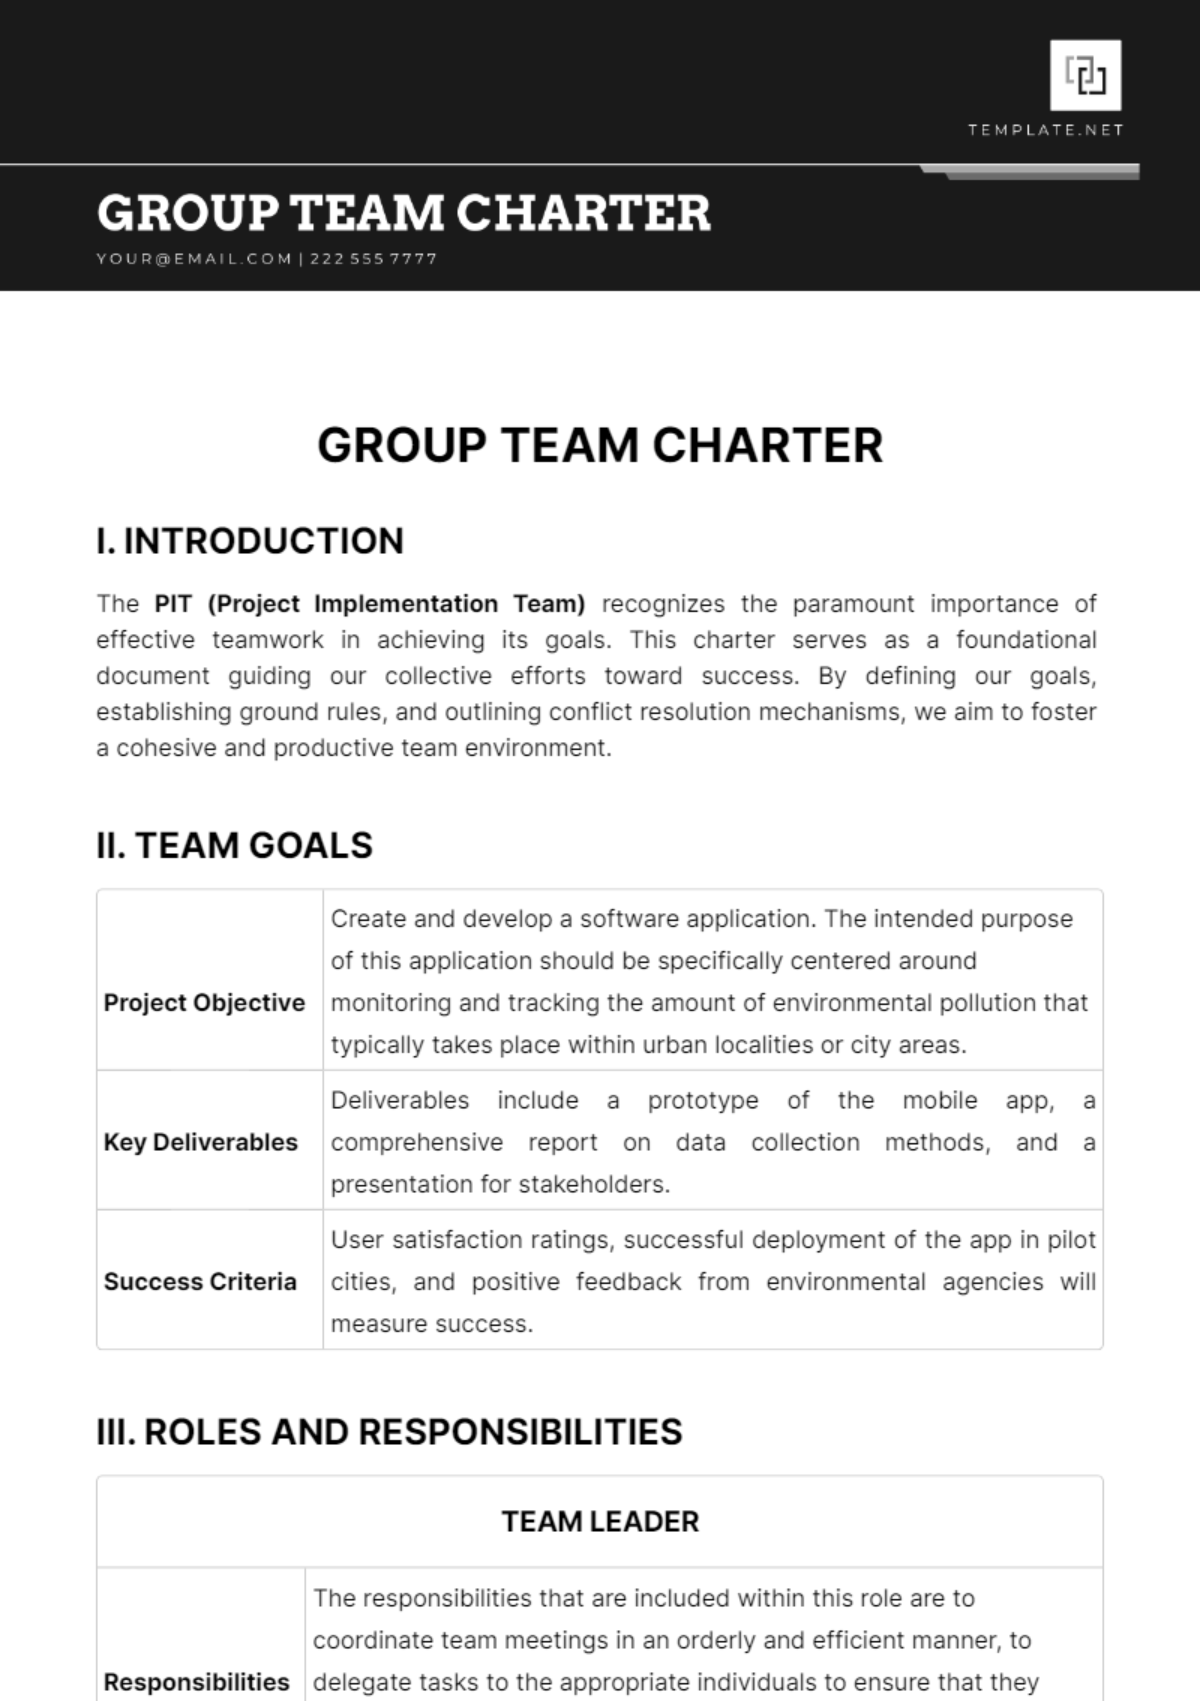 Group Team Charter Template